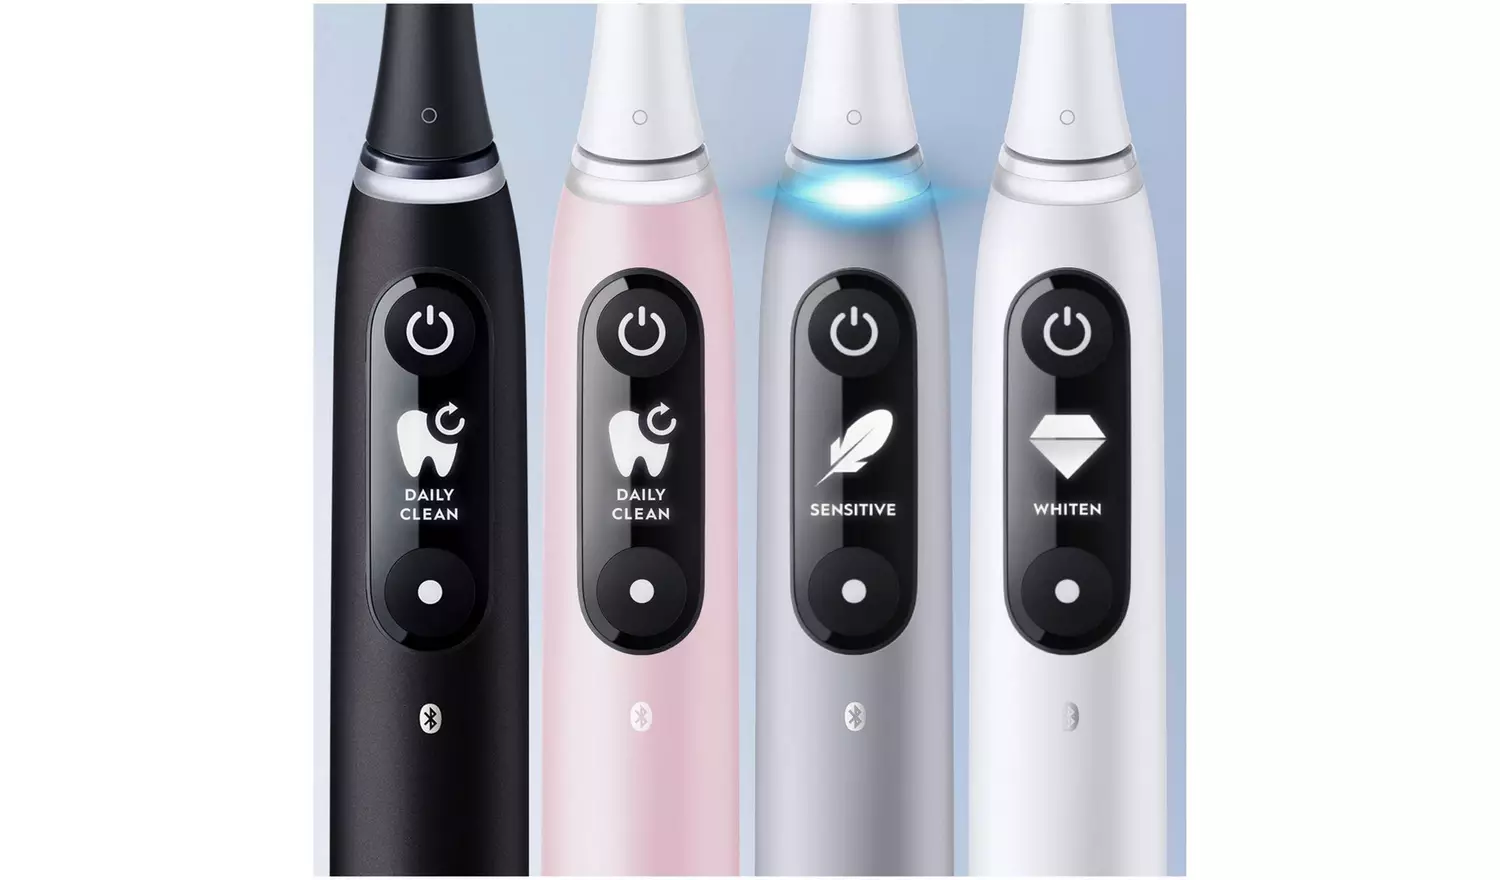 Oral-B iO Series 6 Ultimate Clean Electric Toothbrush Black